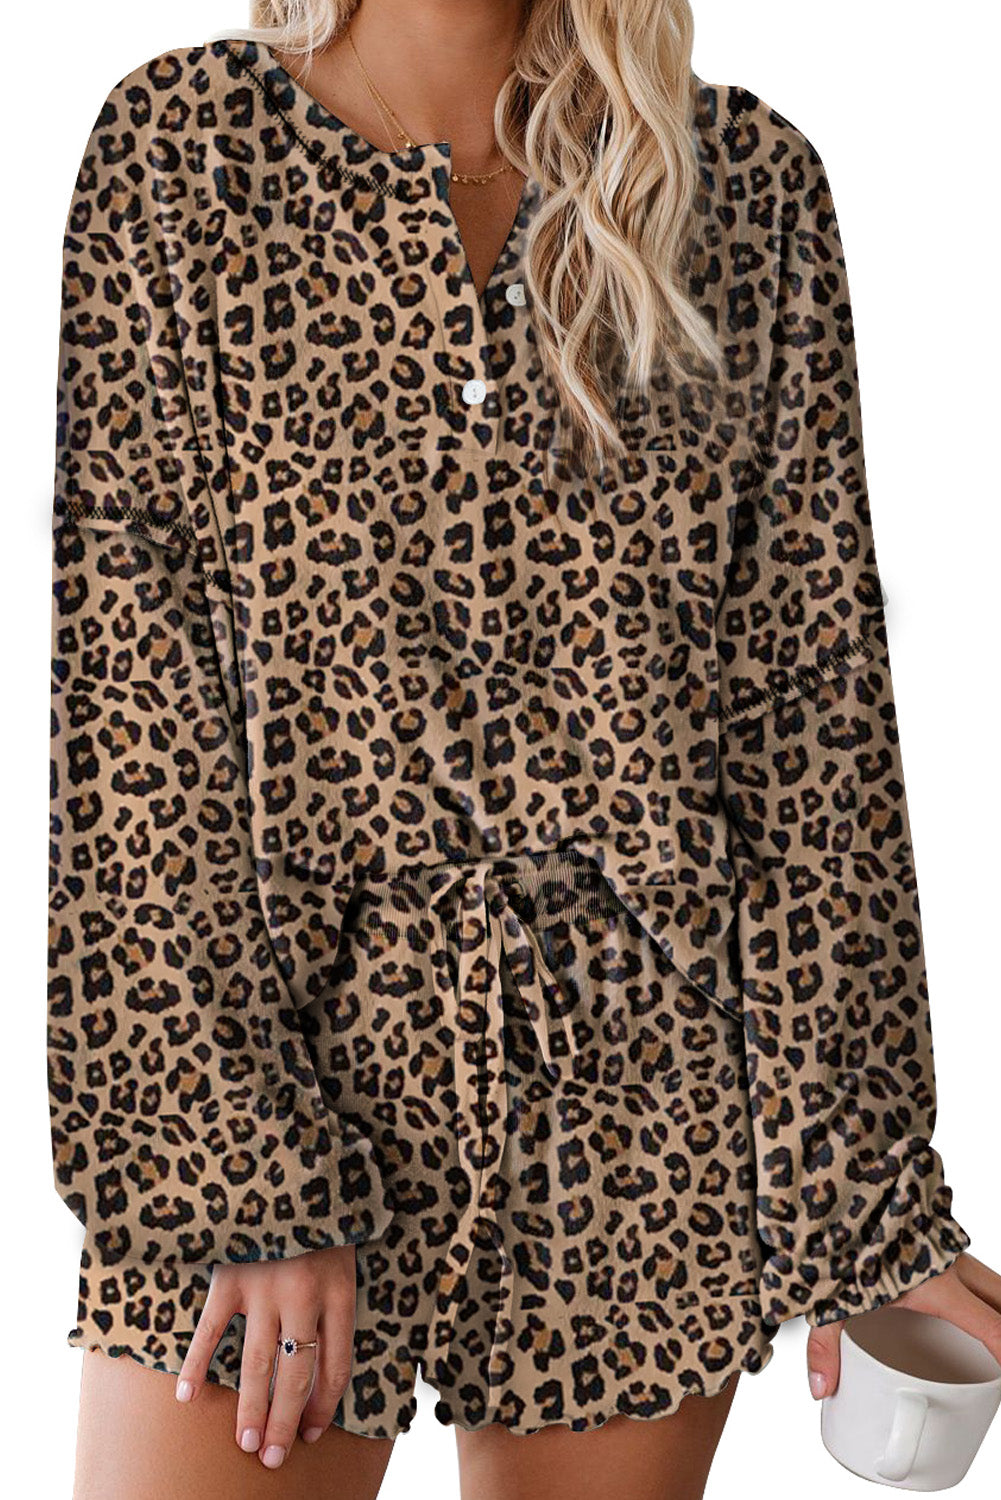 Meselling99 Leopard Tie Dye Knit Pajamas Set-Mini Dresses-Free Shipping at meselling99